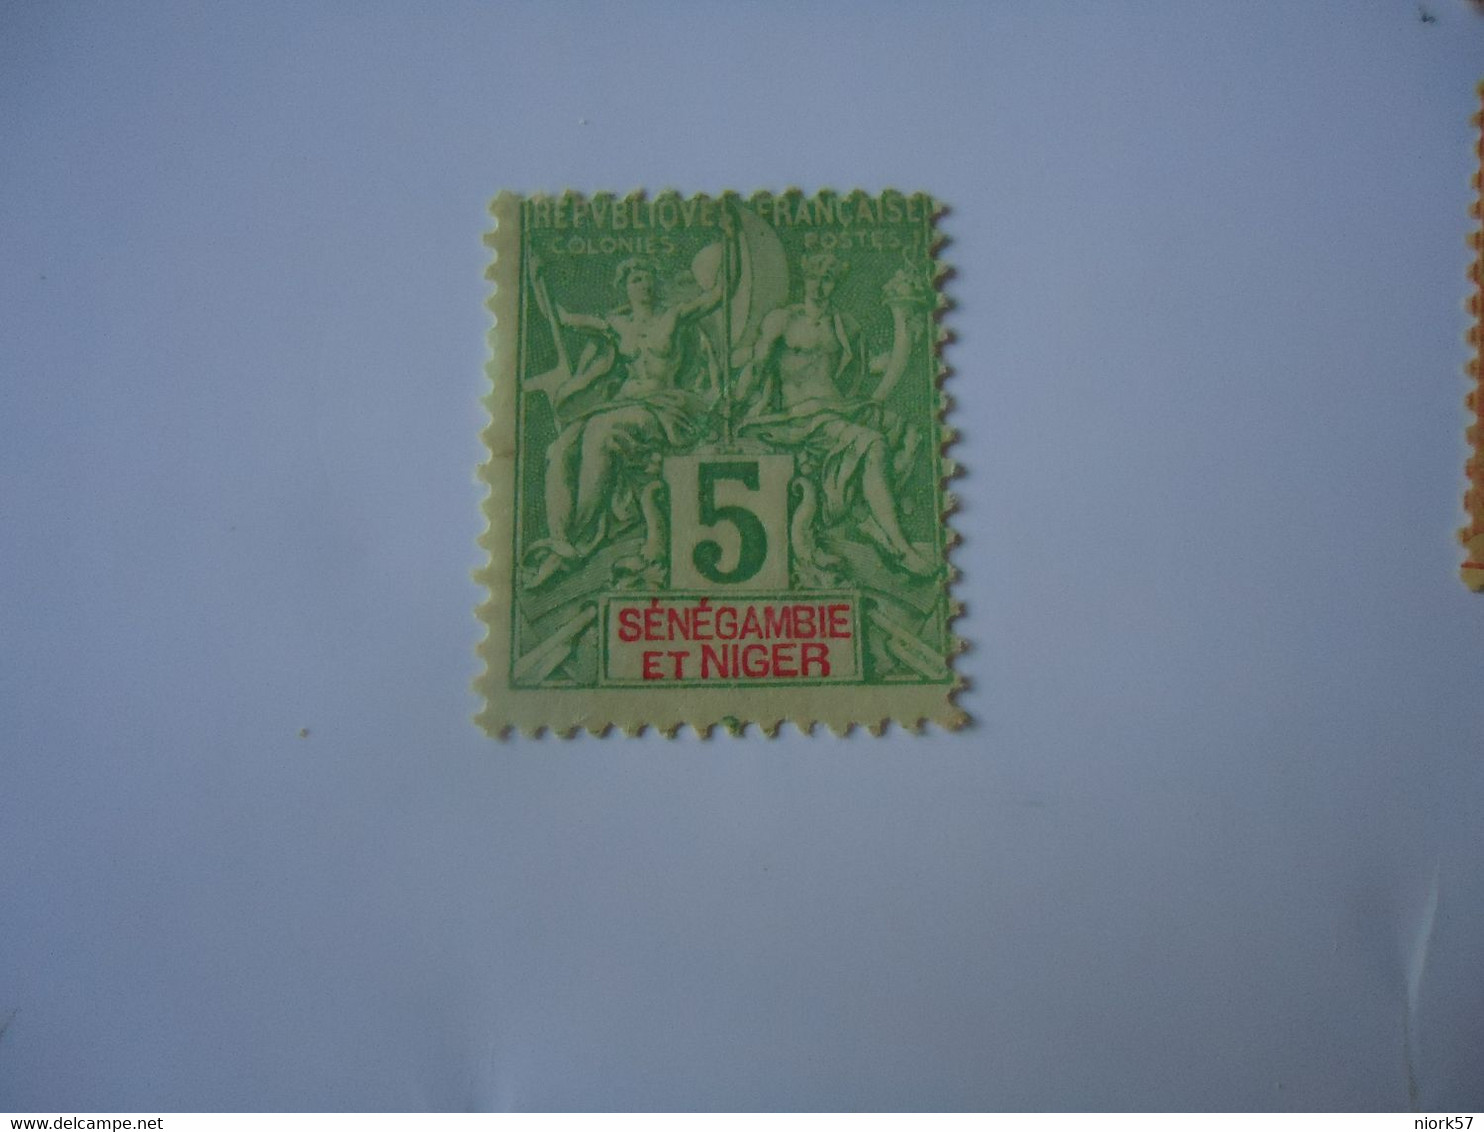 SENEGAMBIA ALD NIGER  FRANCE MLN   STAMPS - Unused Stamps